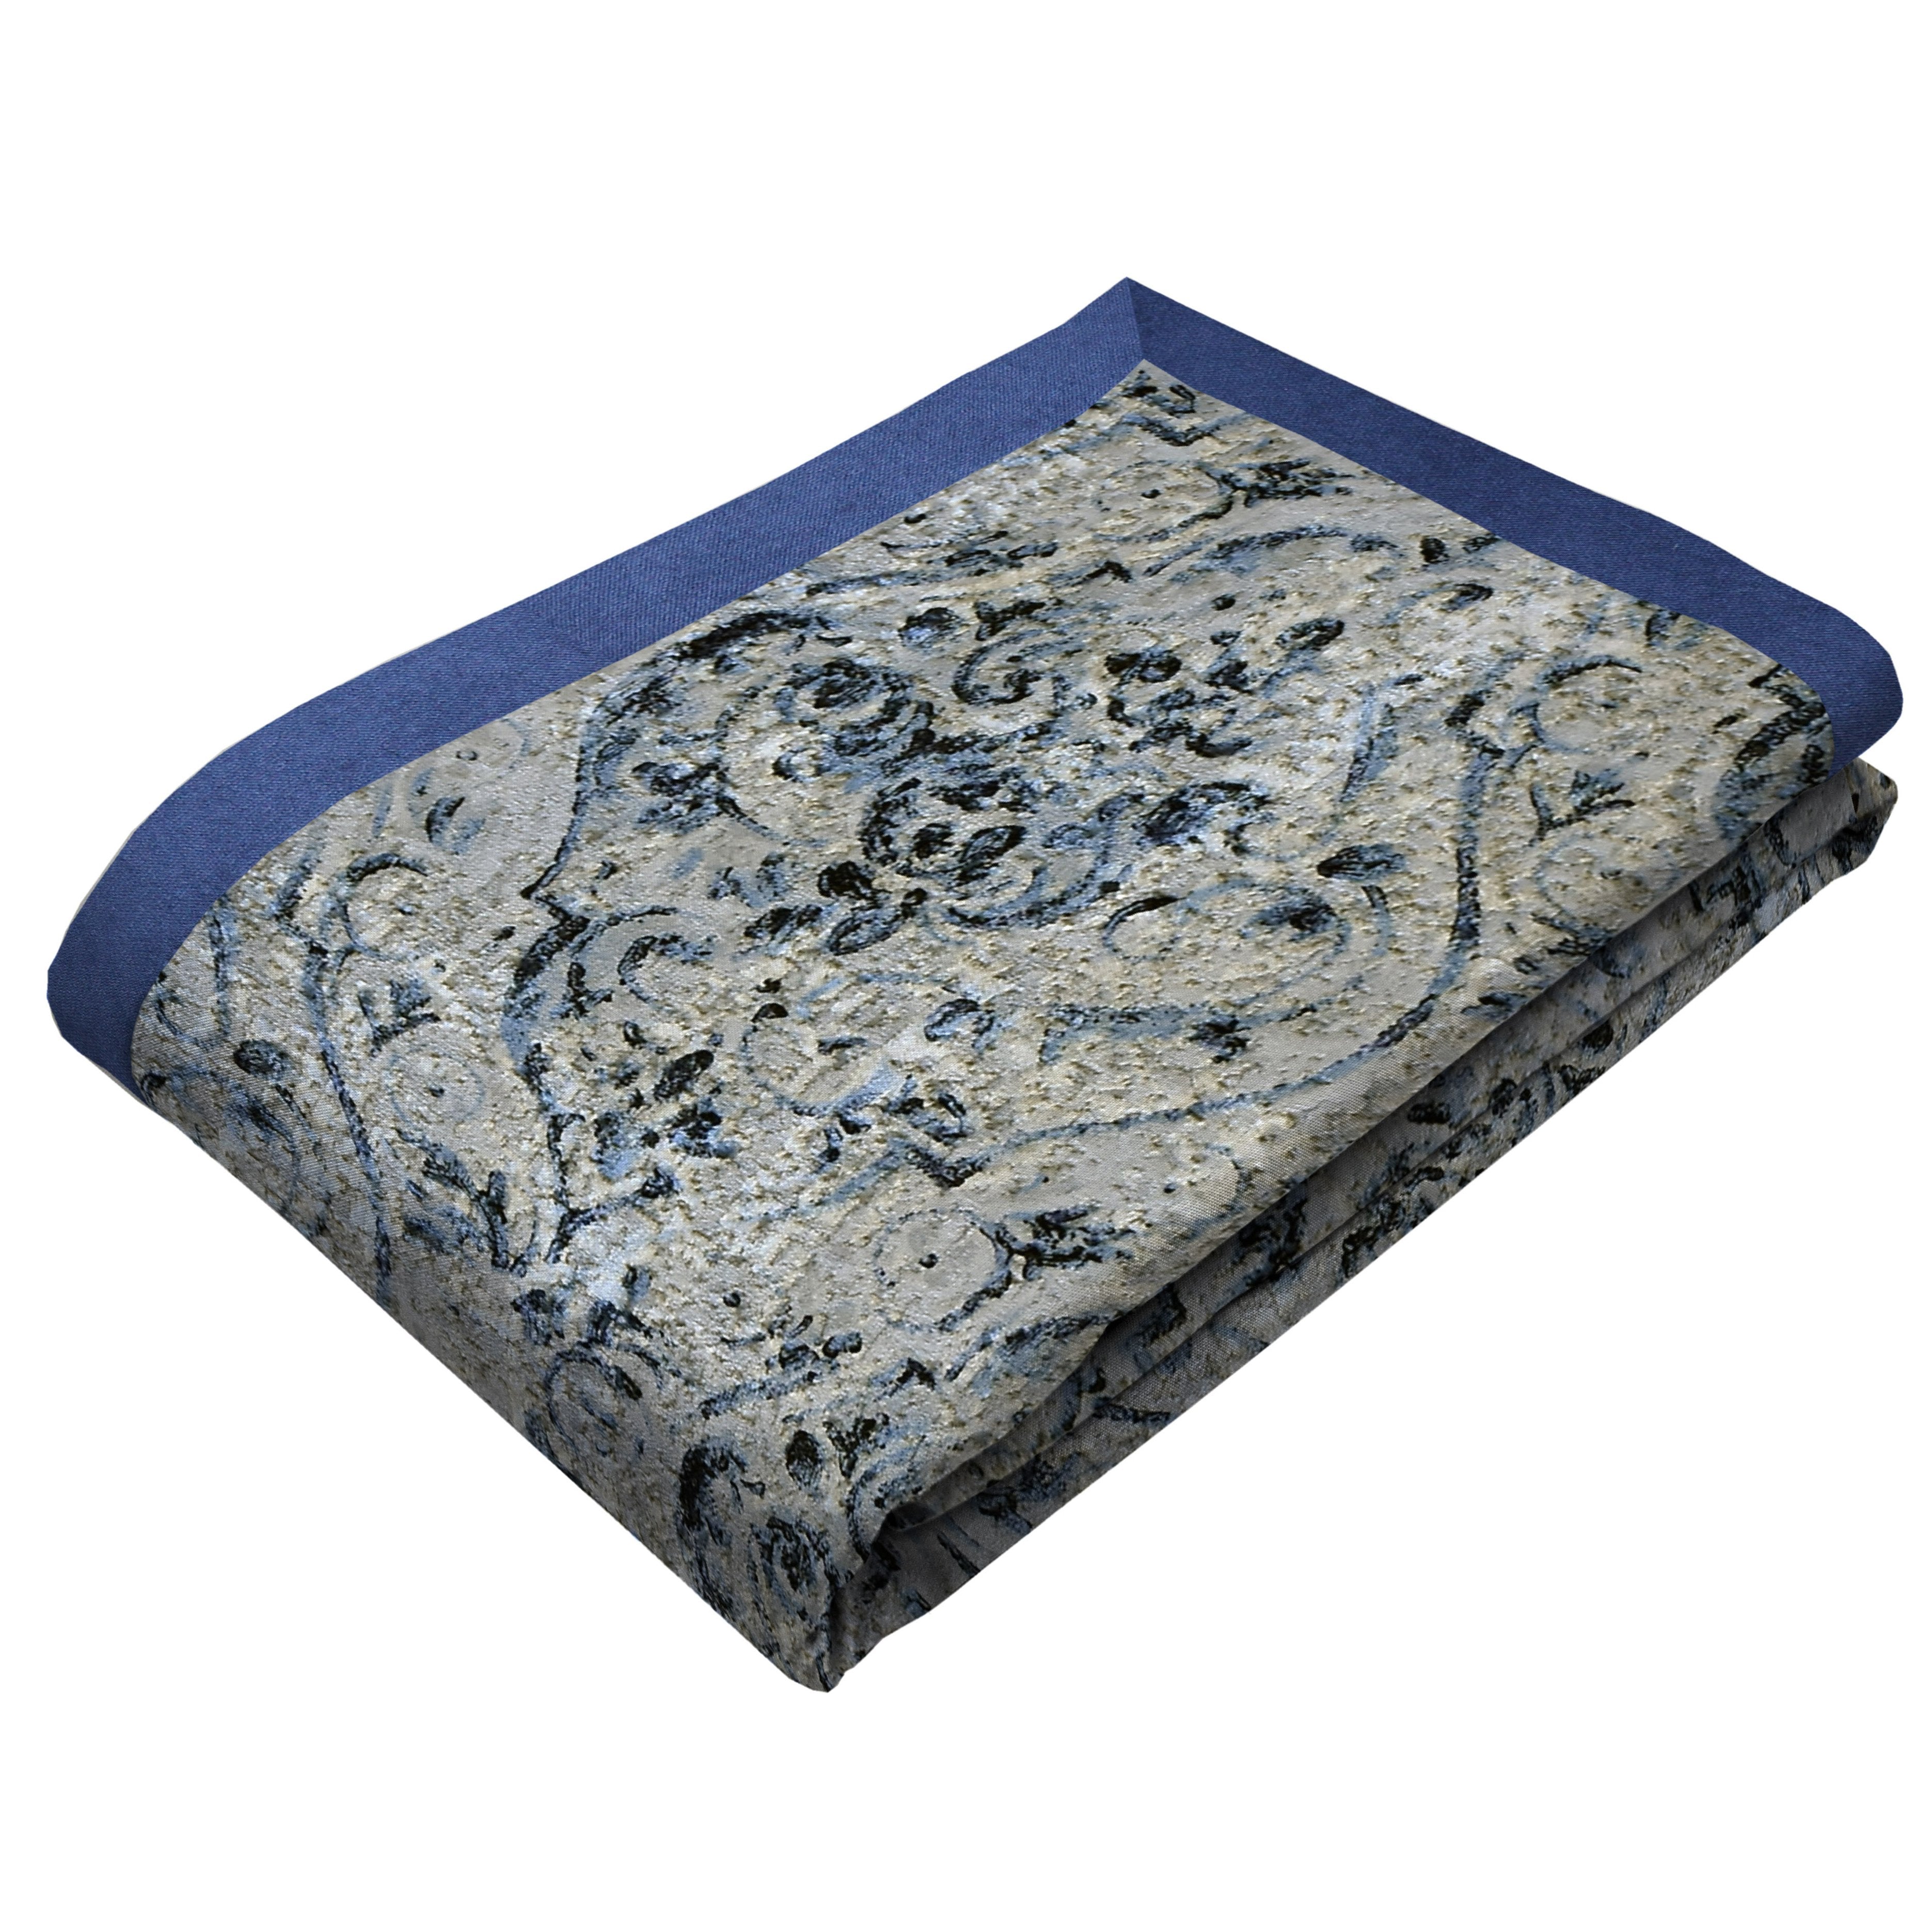 McAlister Textiles Renaissance Navy Blue Printed Velvet Throws & Runners Throws and Runners Bed Runner (50cm x 240cm) 